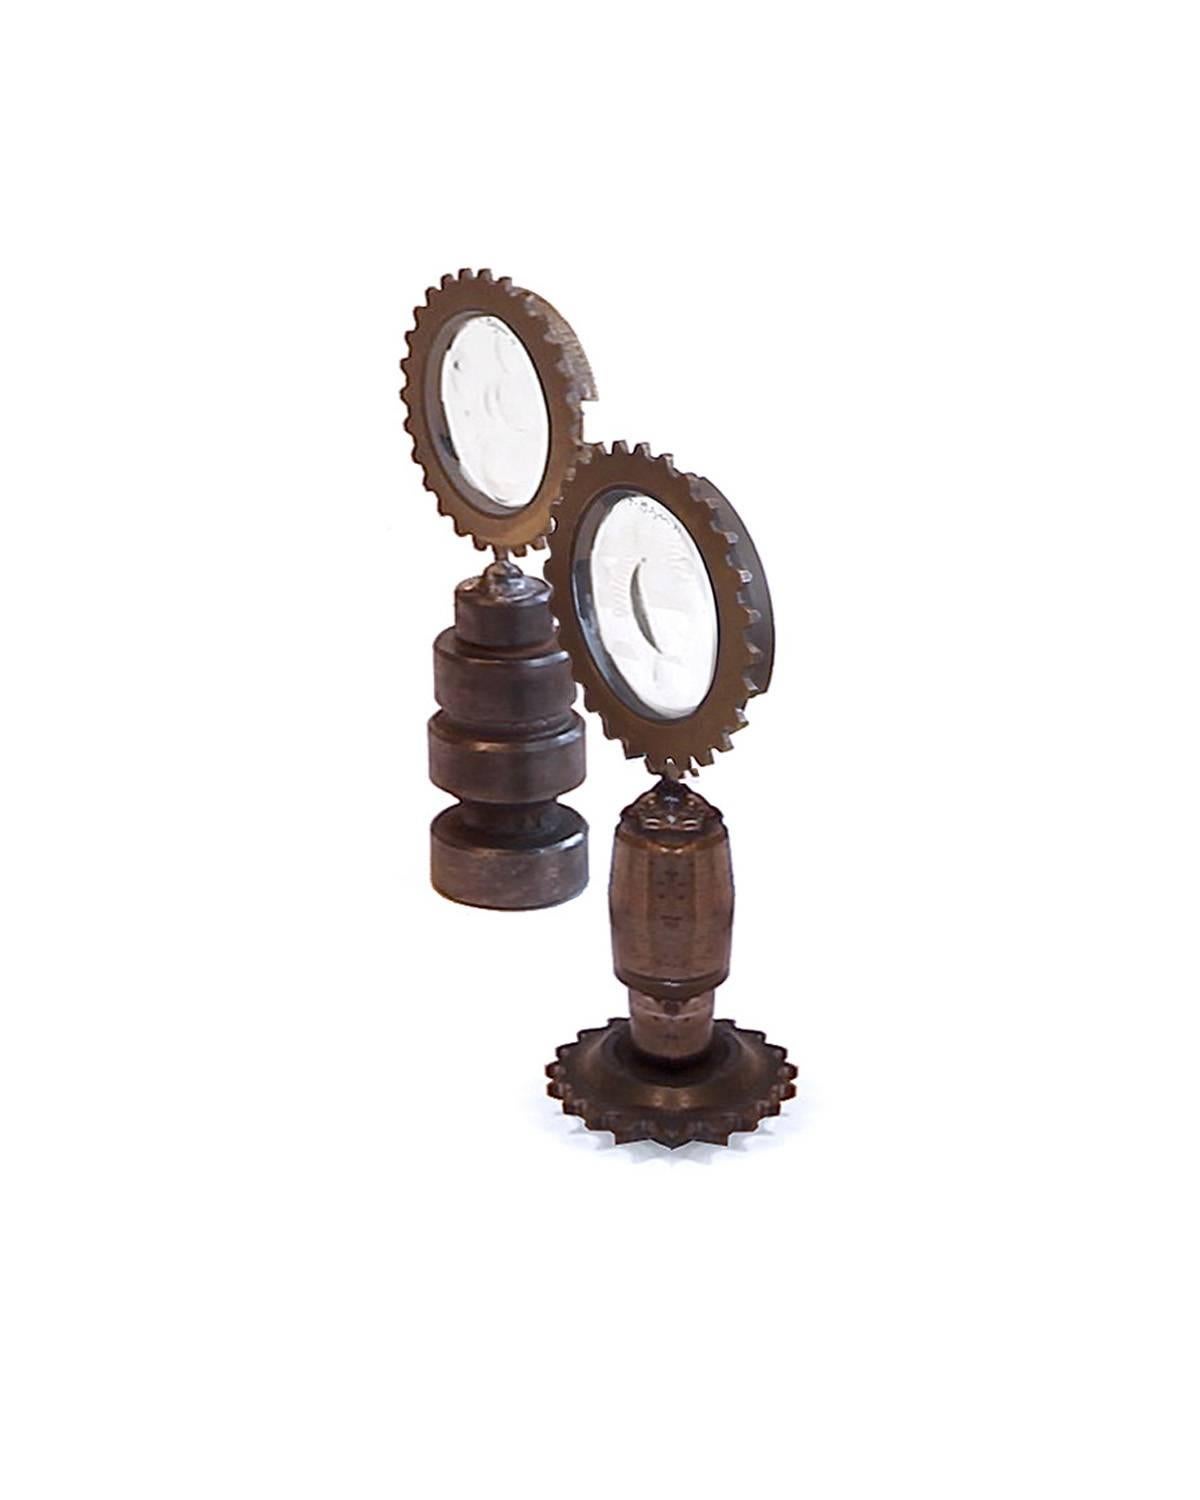 American Miniature Magiscope Sculptures by Feliciano Béjar For Sale